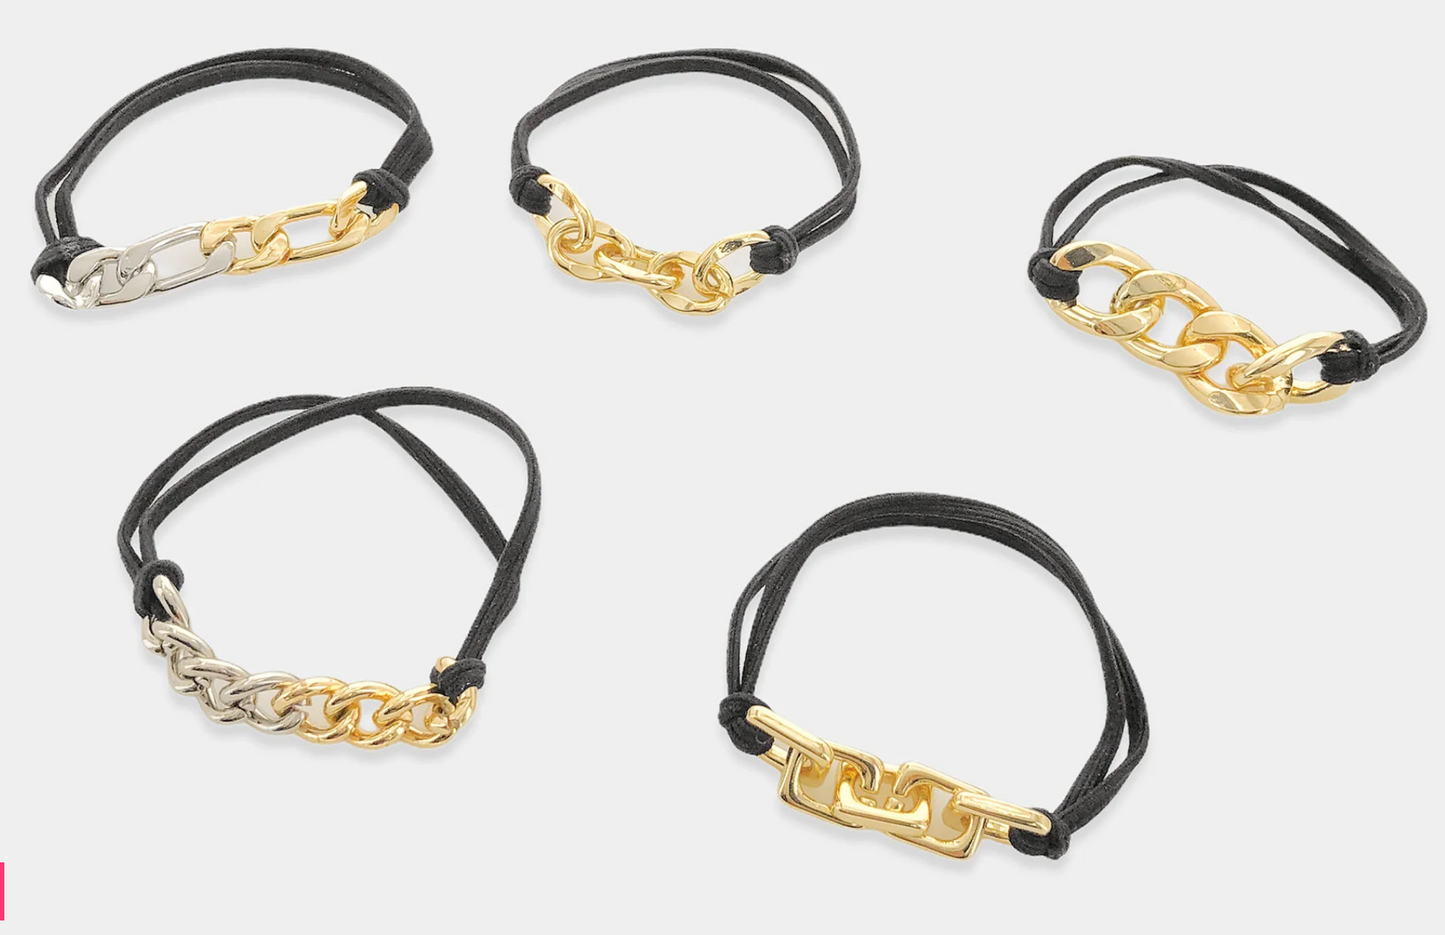 5pc Hair Tie - Bracelet Set